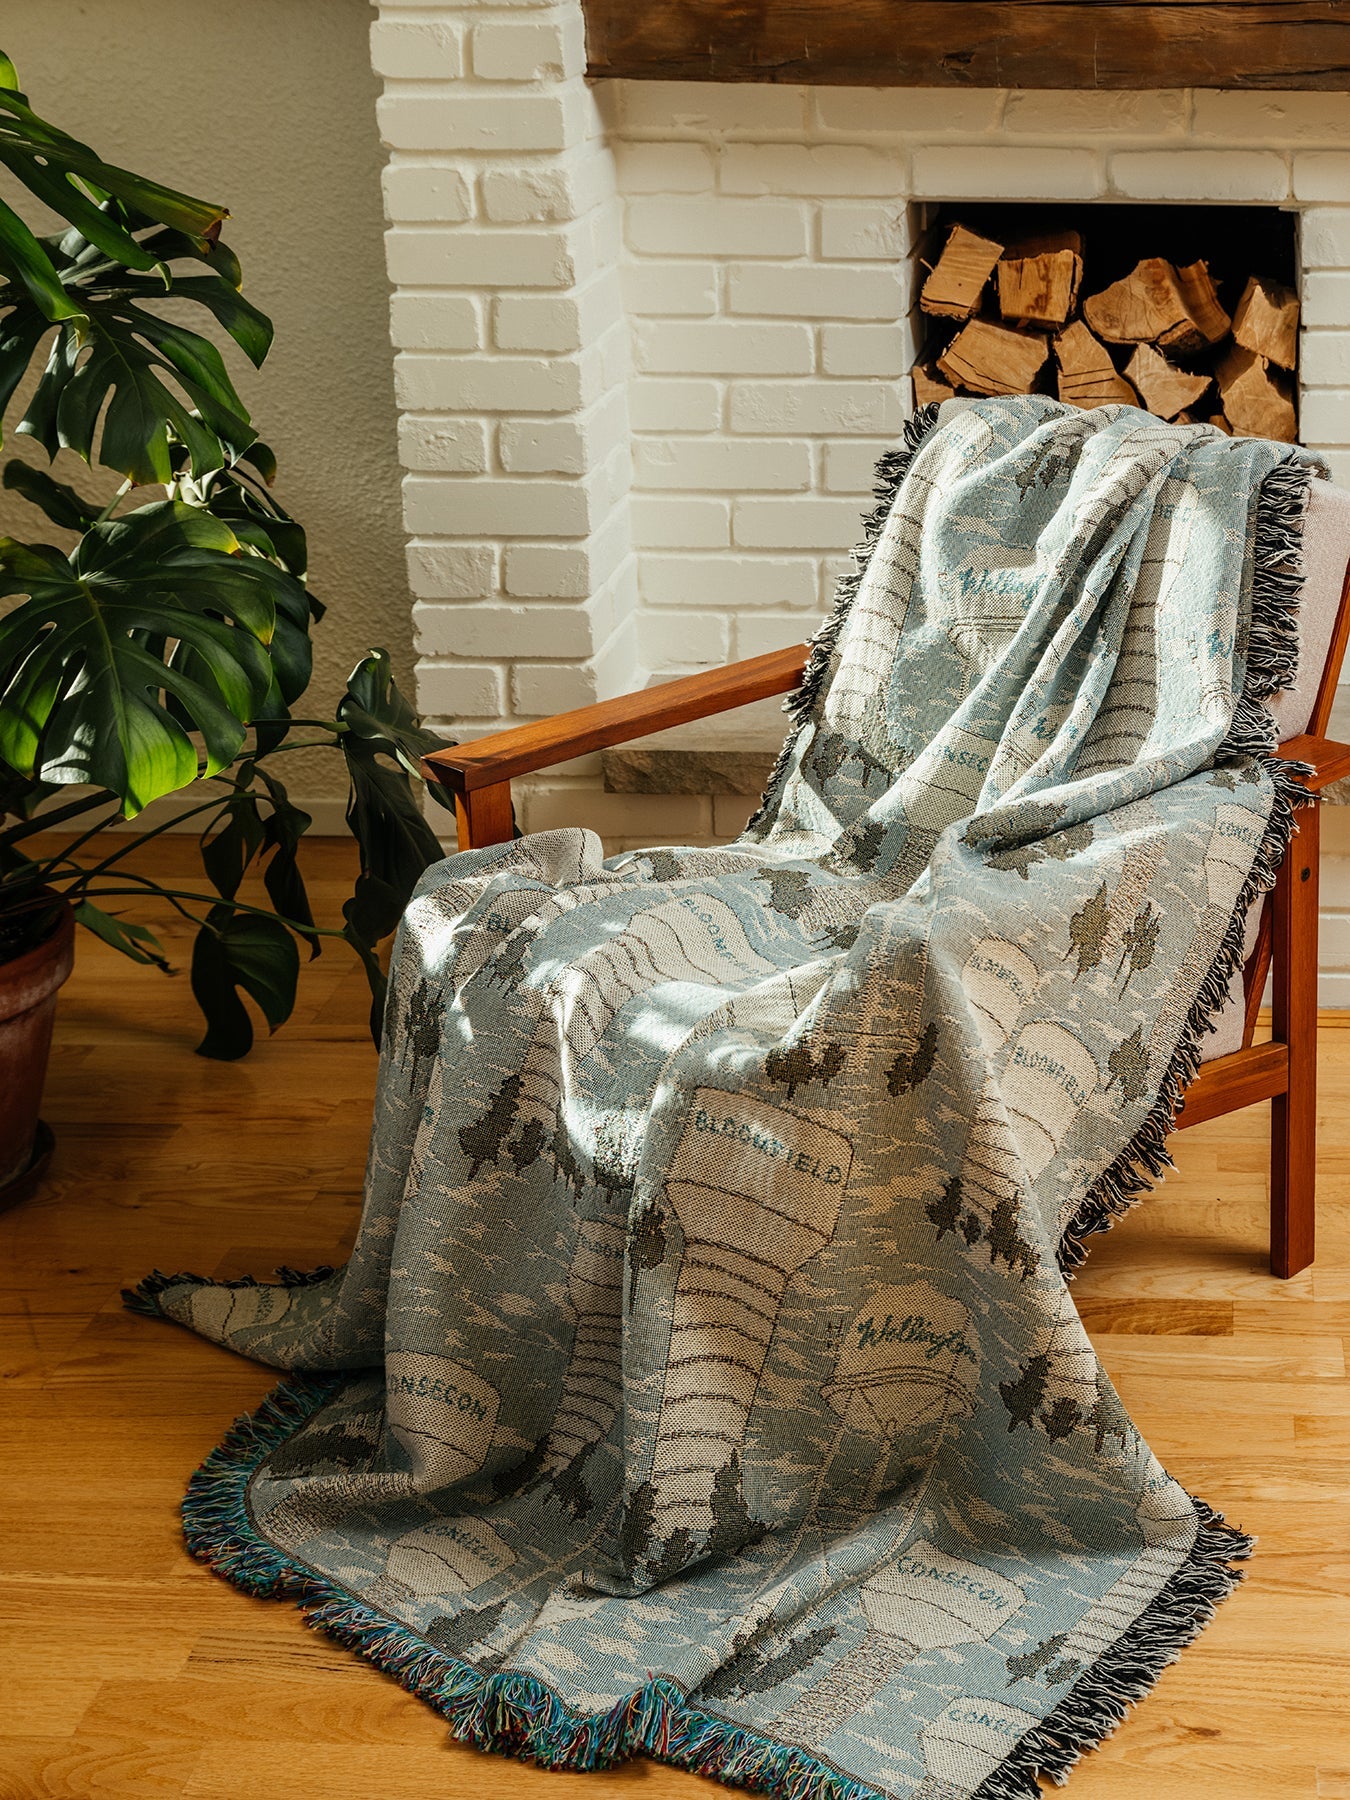 Bonavista Houses Woven Throw Blanket – Kate Golding